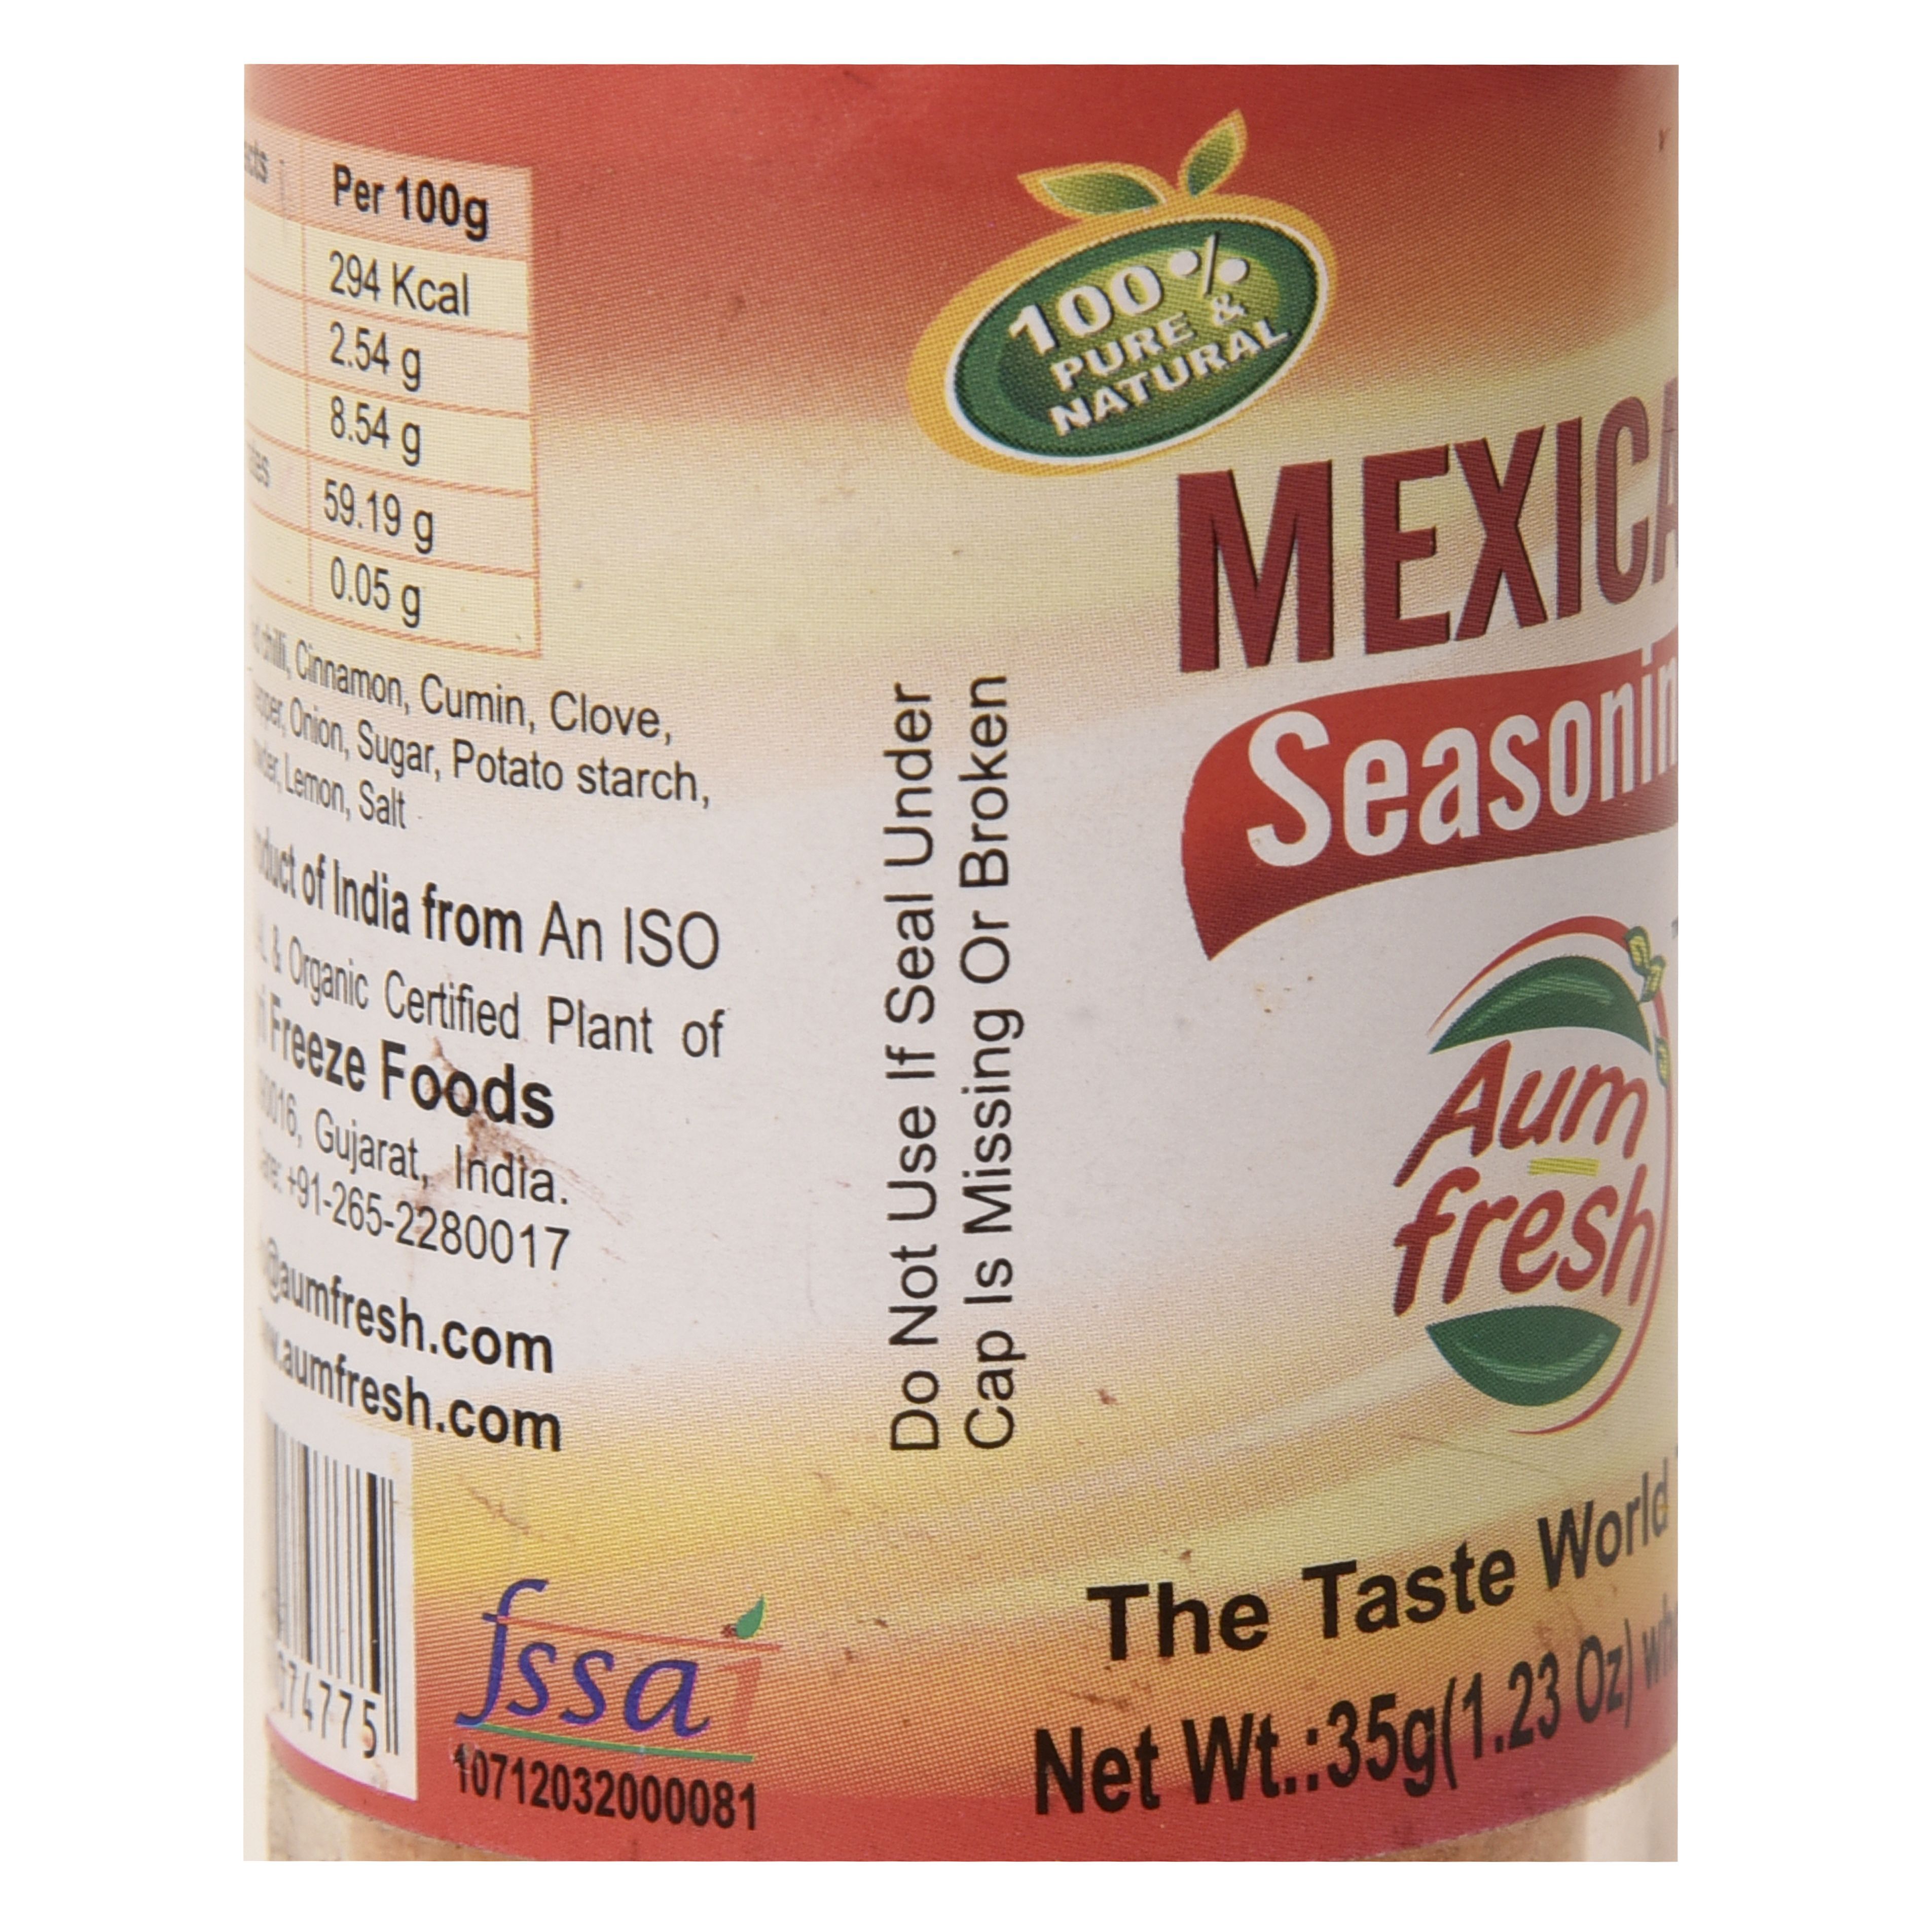 Mexican Seasoning